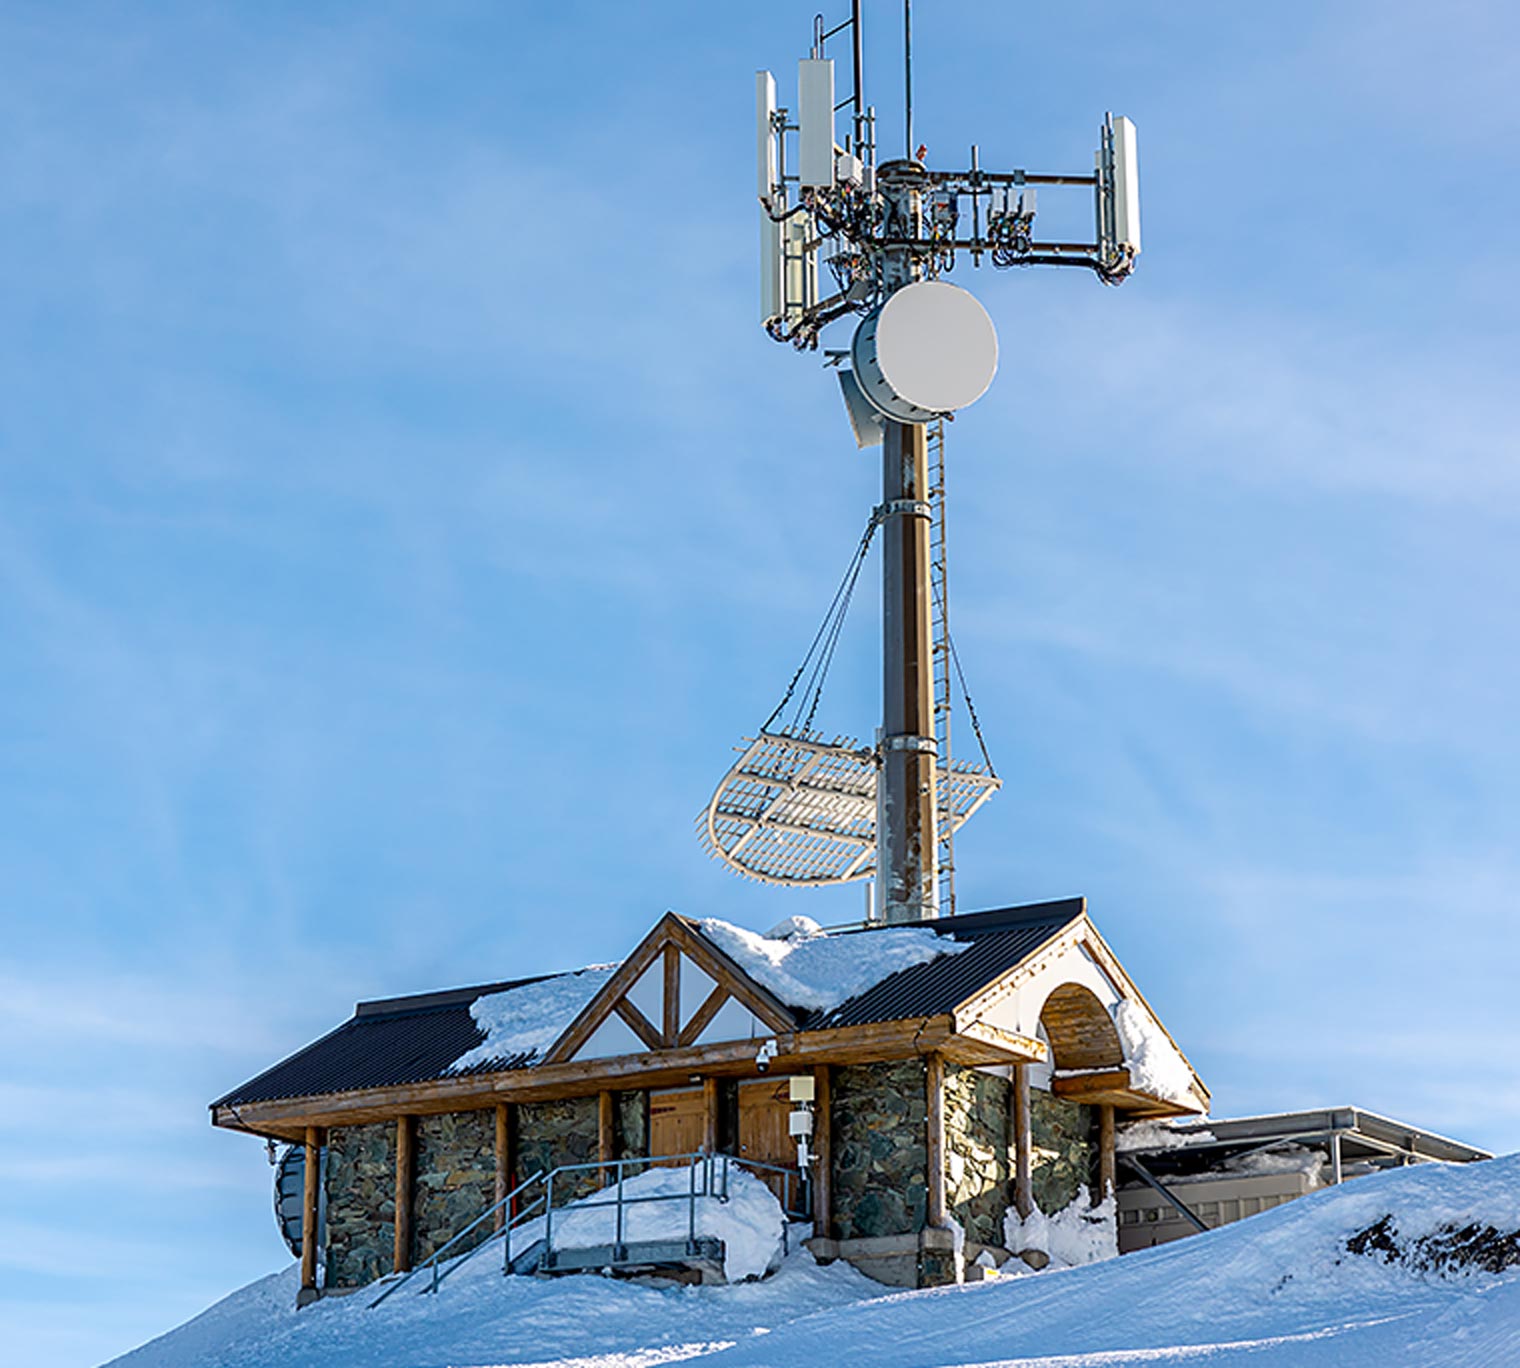 Communication tower at ski resort in winter.